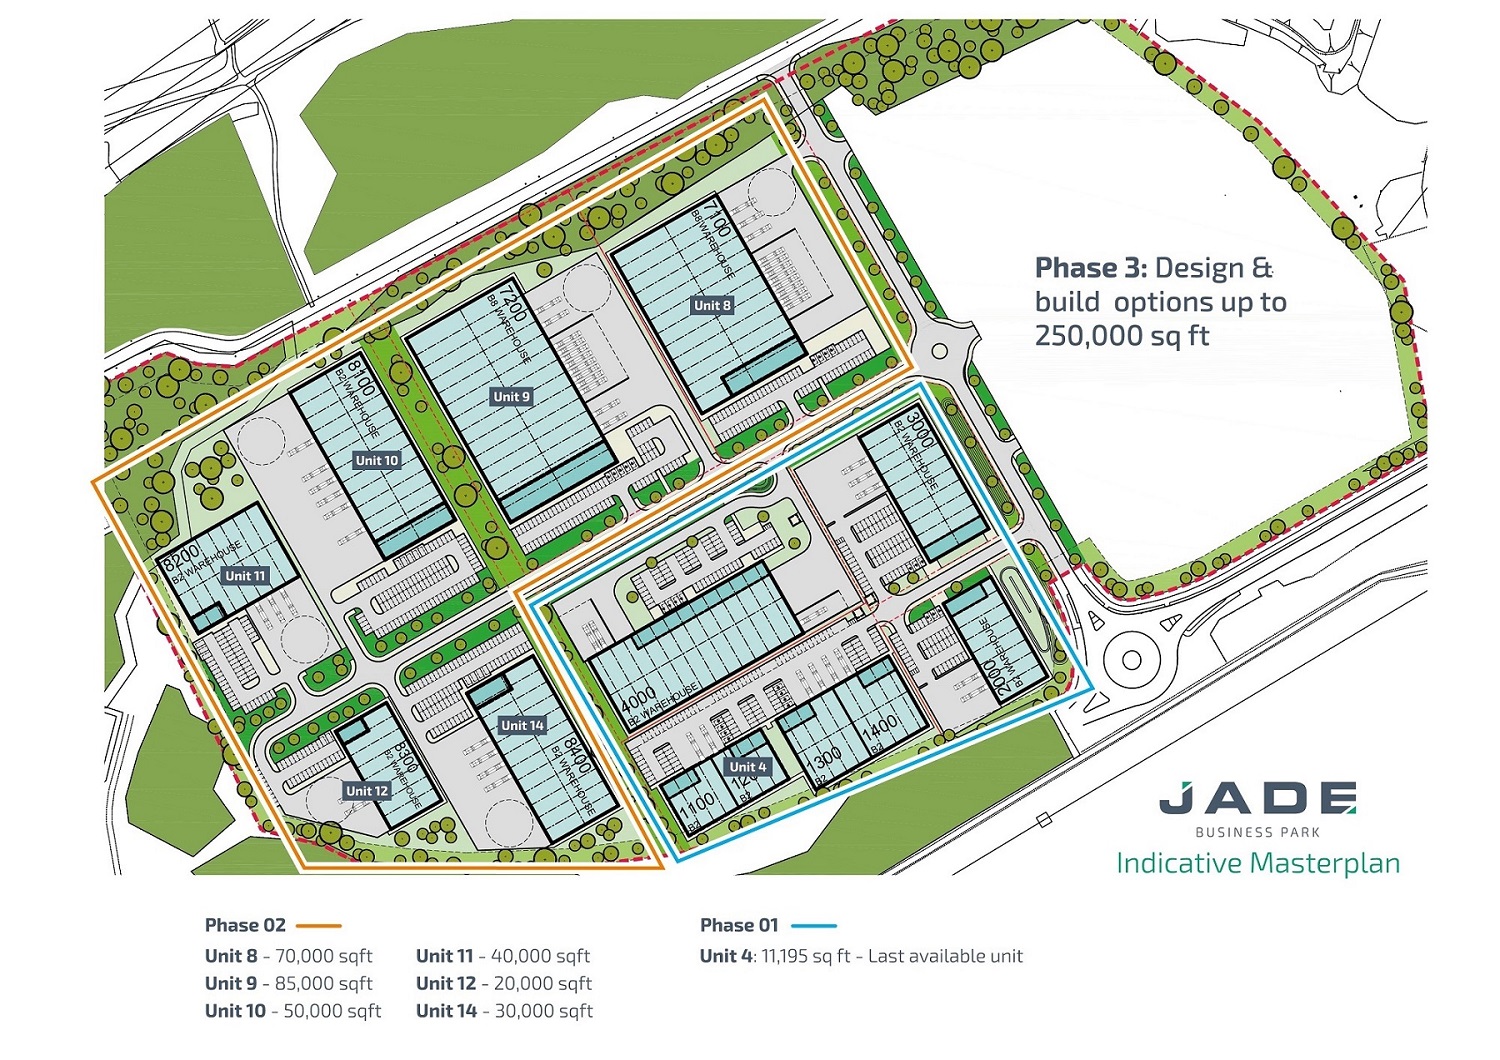 Jade Business Park Indicative Masterplan